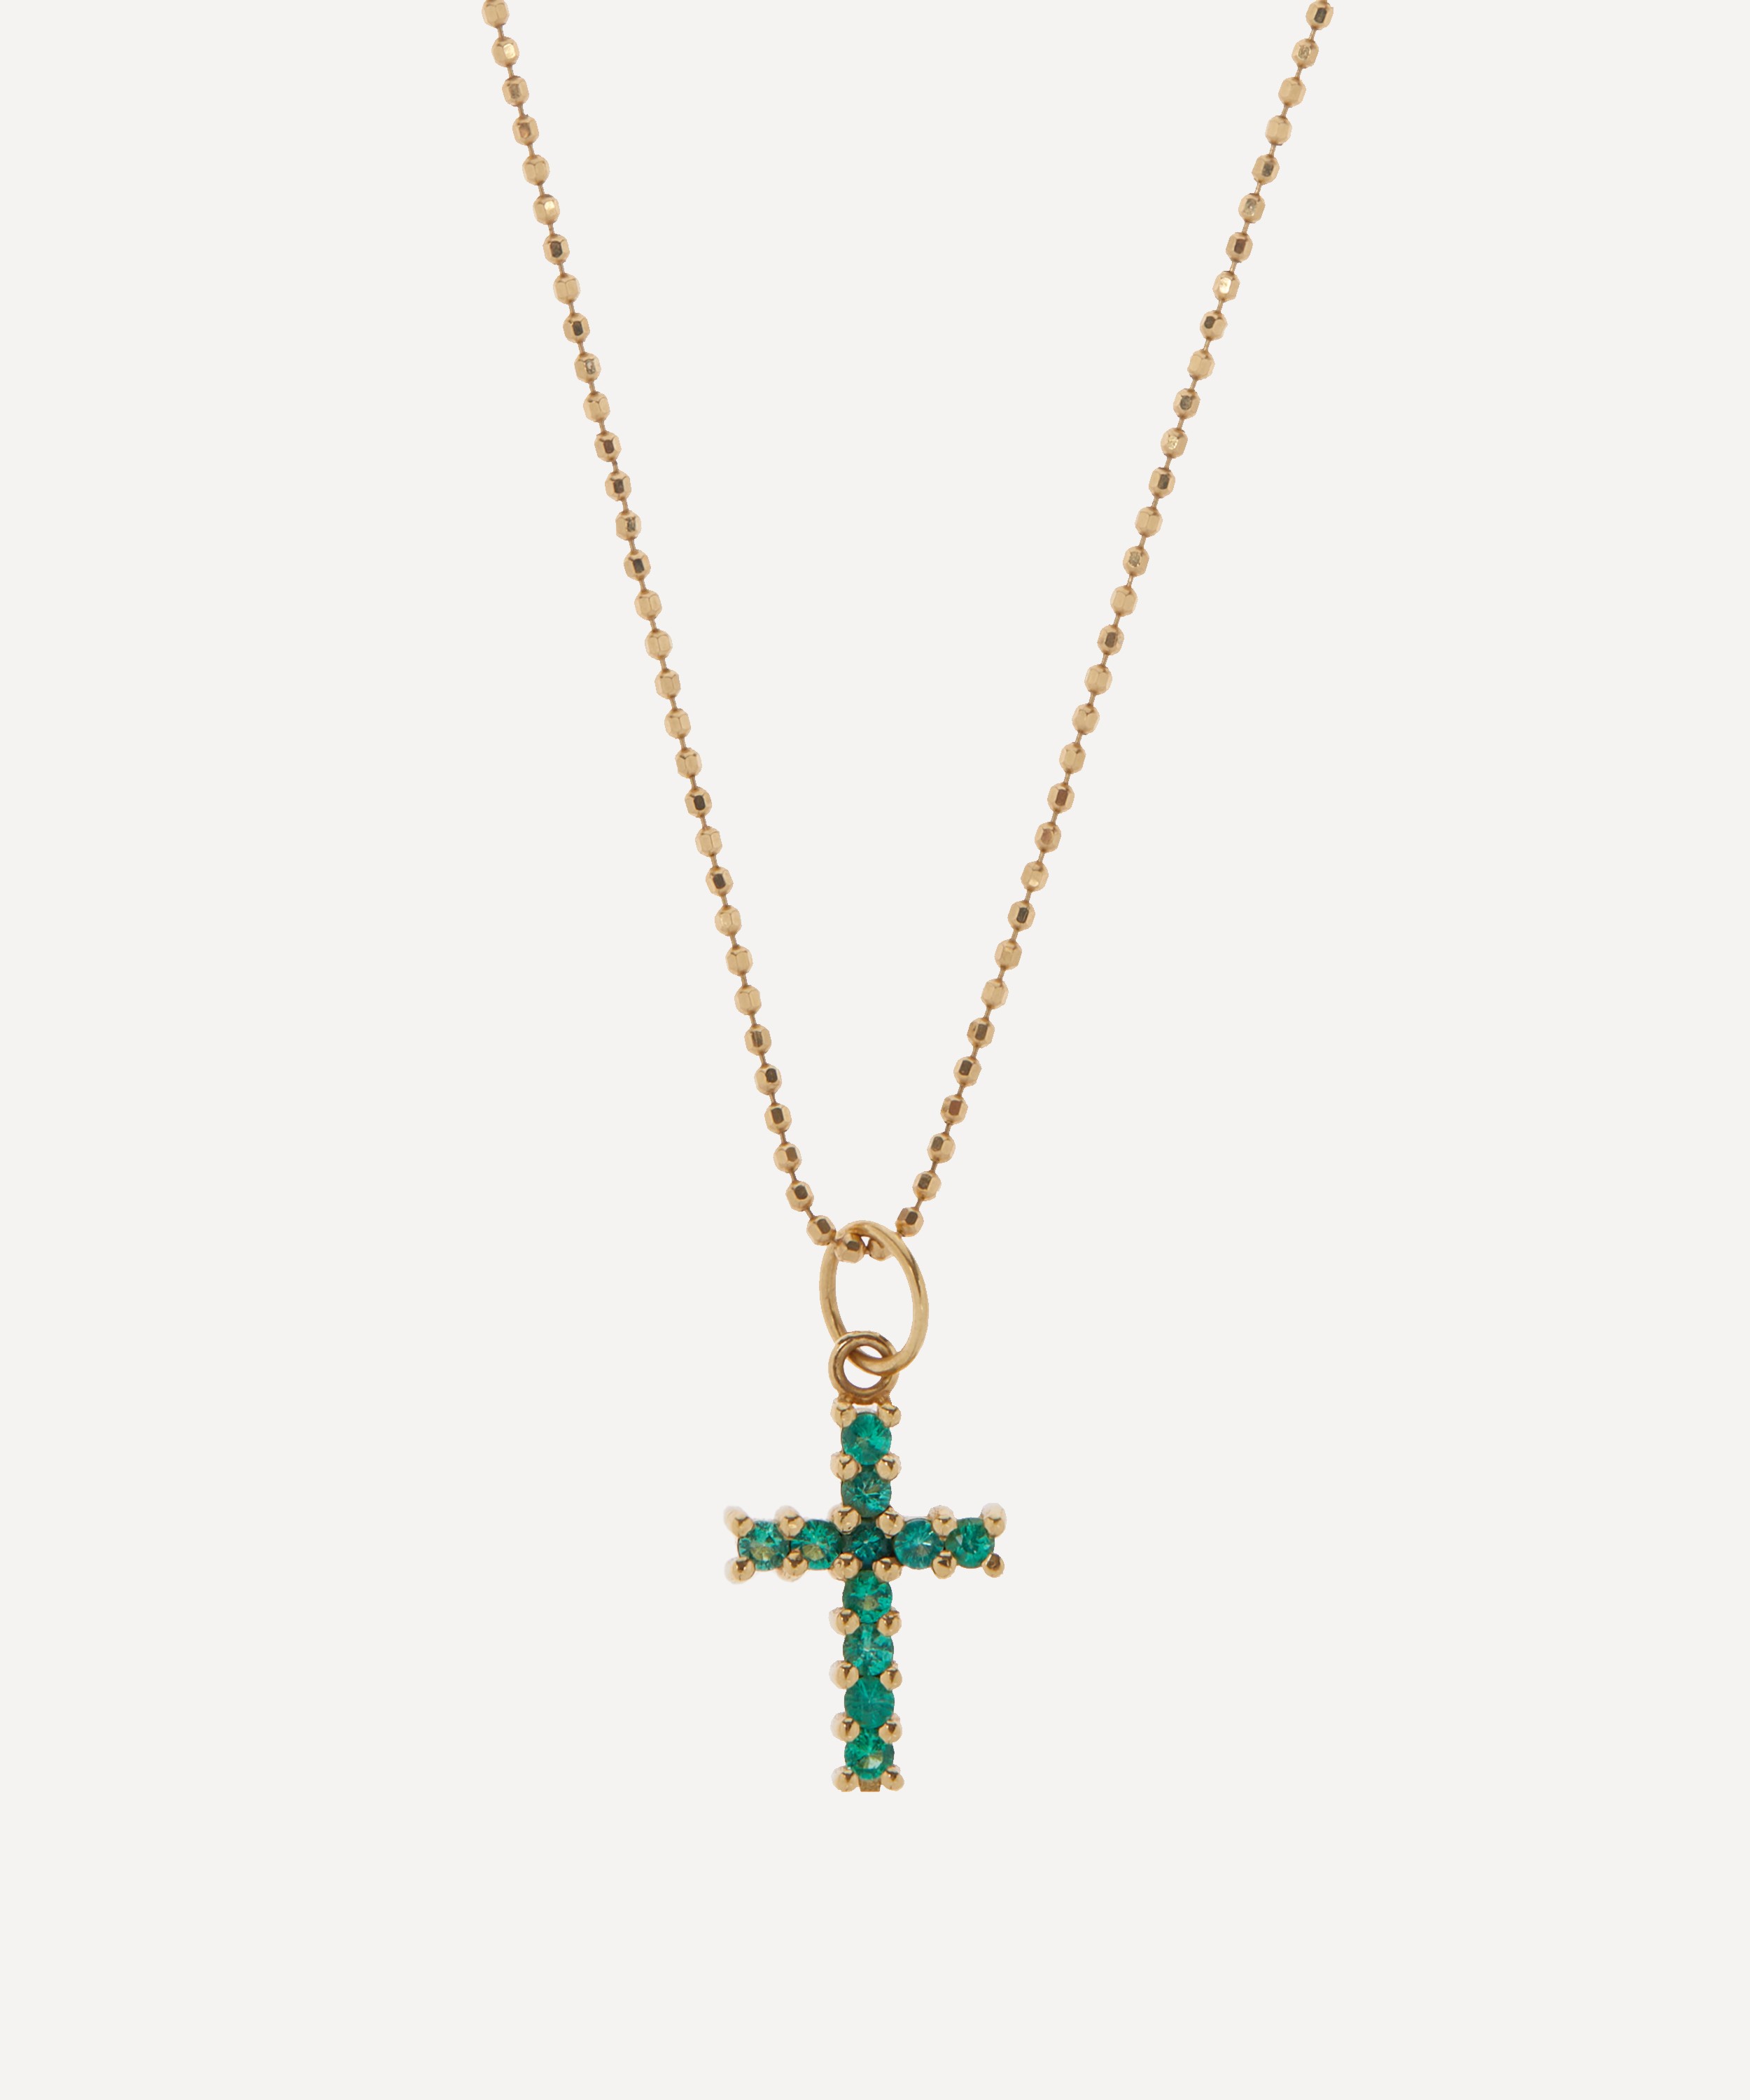 Andrea Fohrman - 18ct Gold Emerald Pavé Cross Pendant Necklace